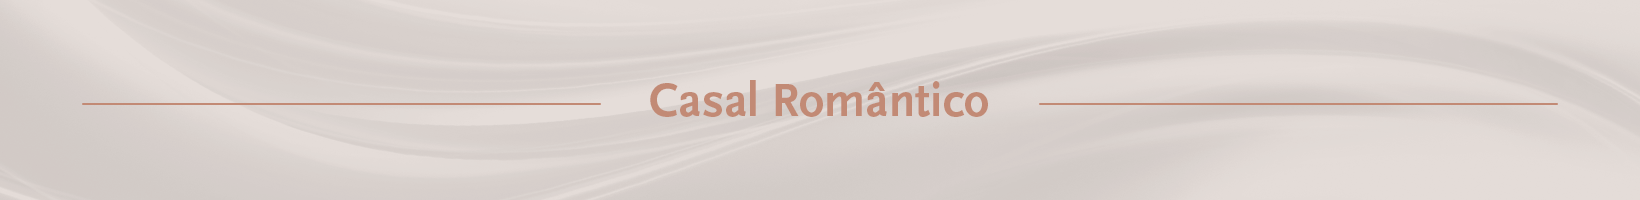 Banner Casal Romantico